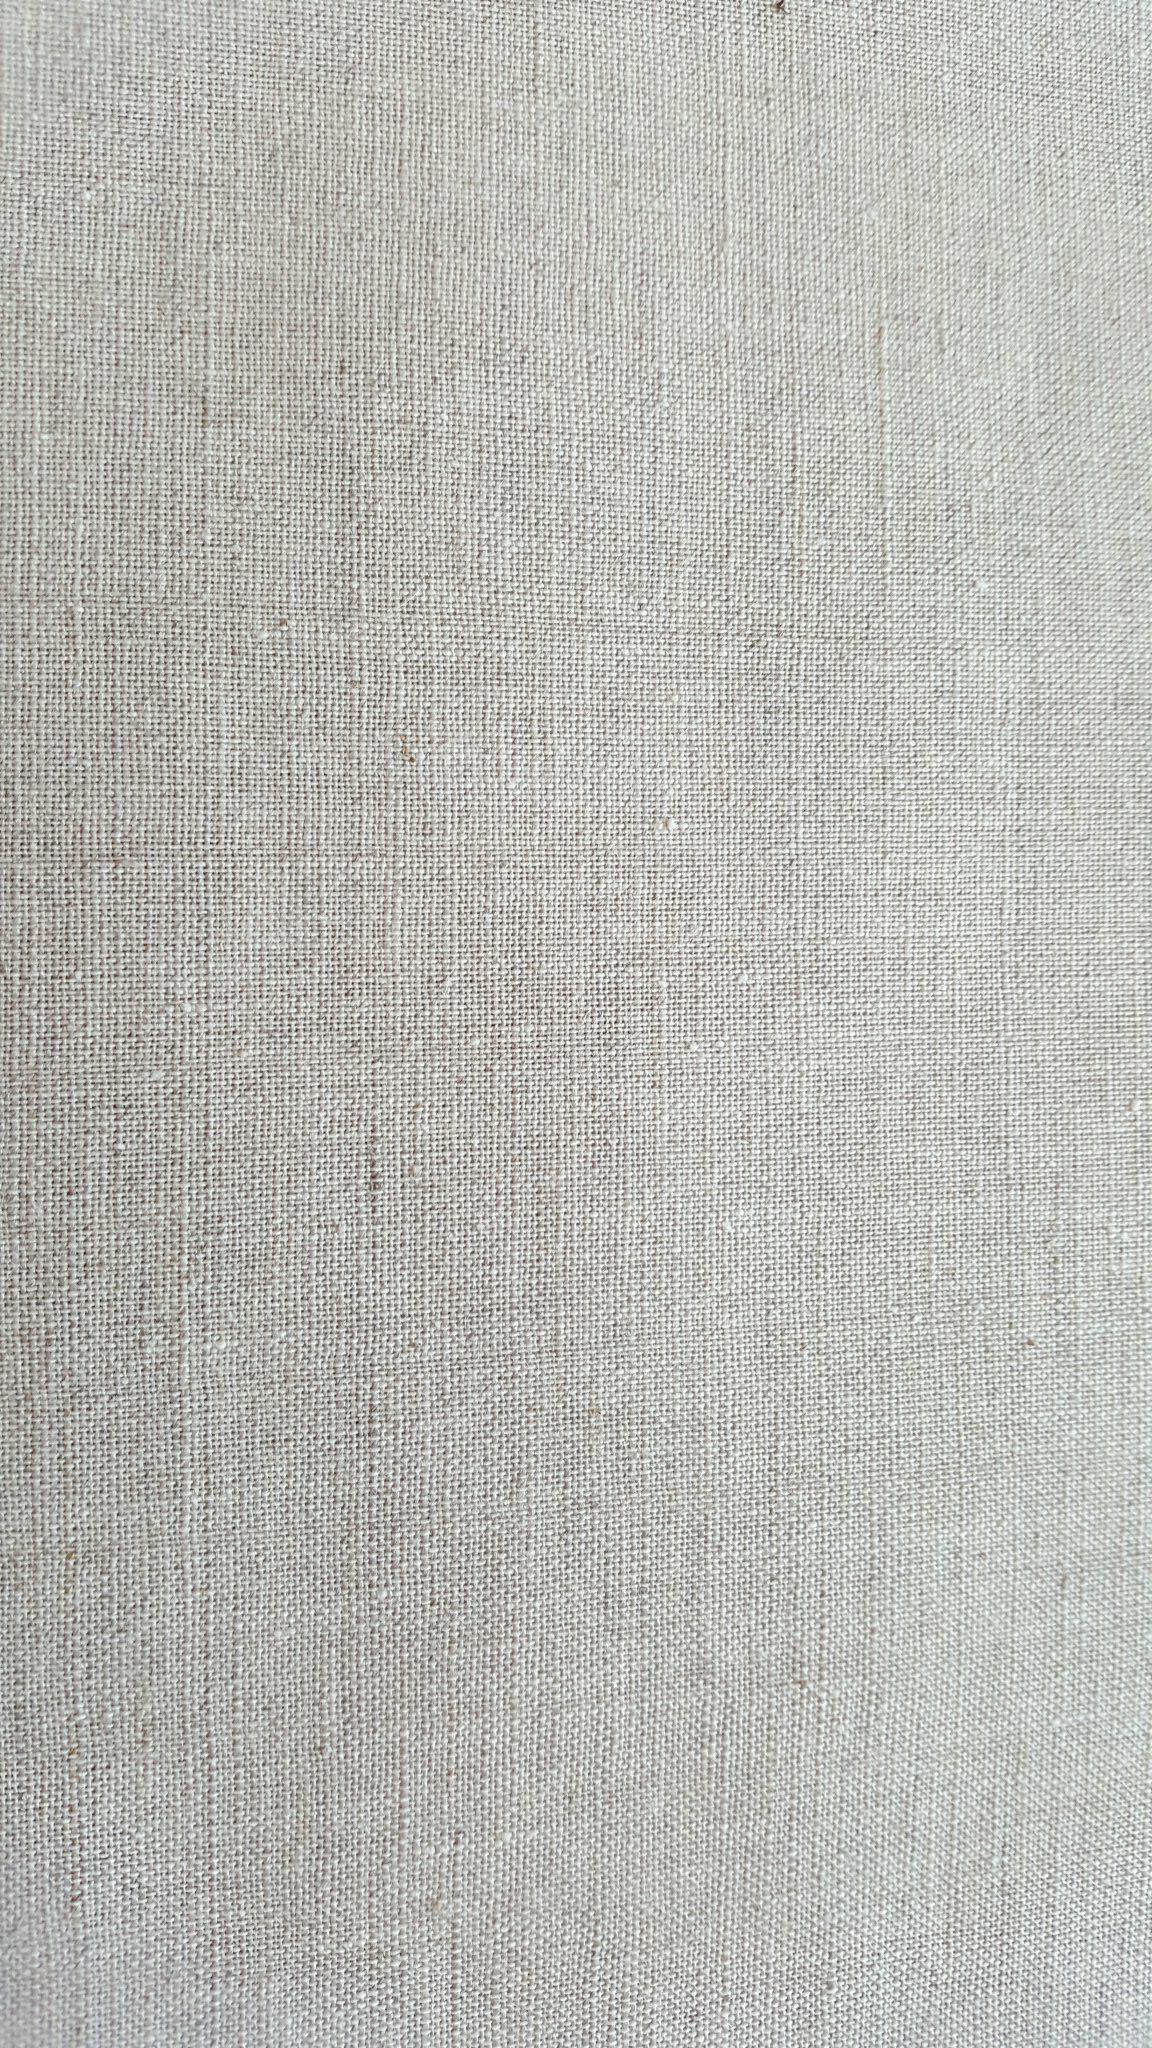 Cotton/linen 210g- natural/white